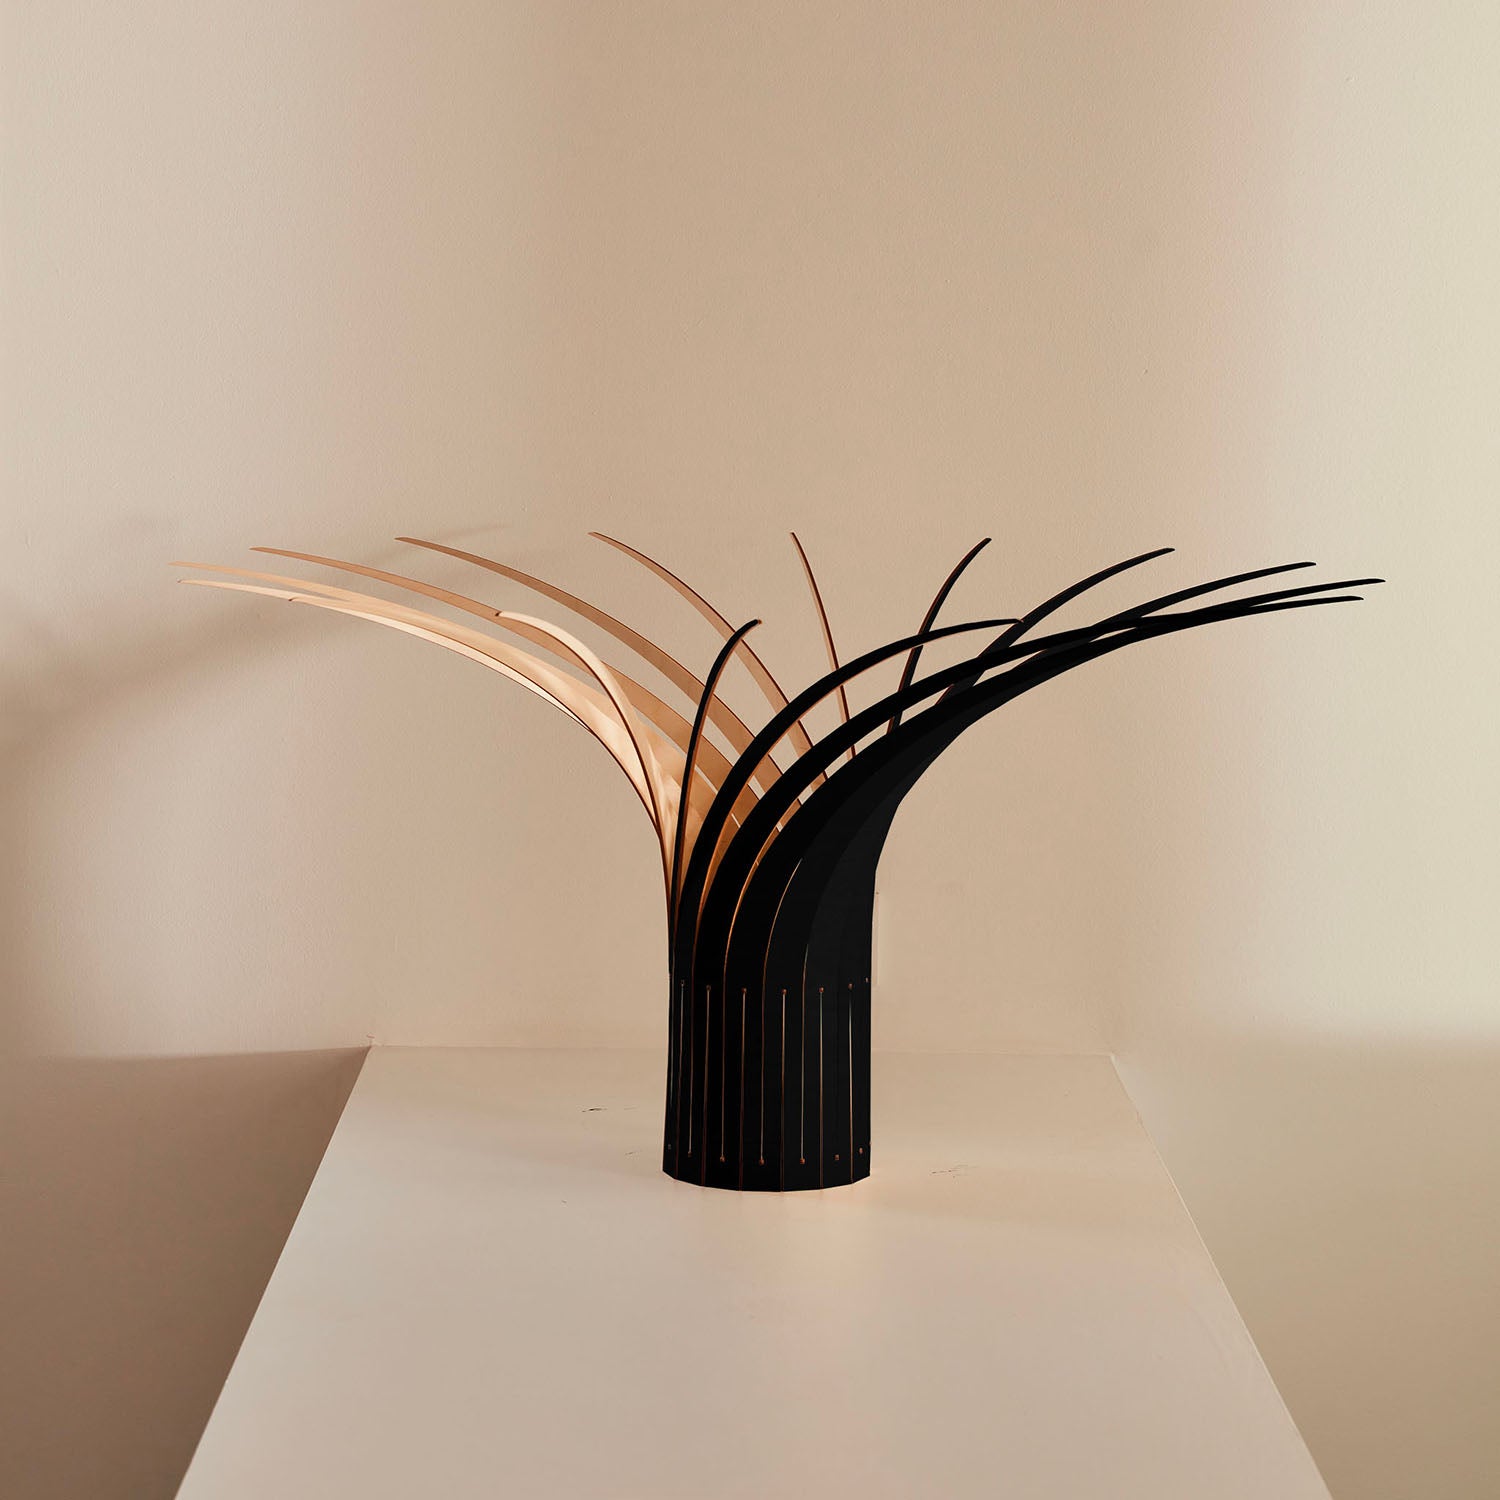 ROTOND - Circular table lamp in handmade natural wood